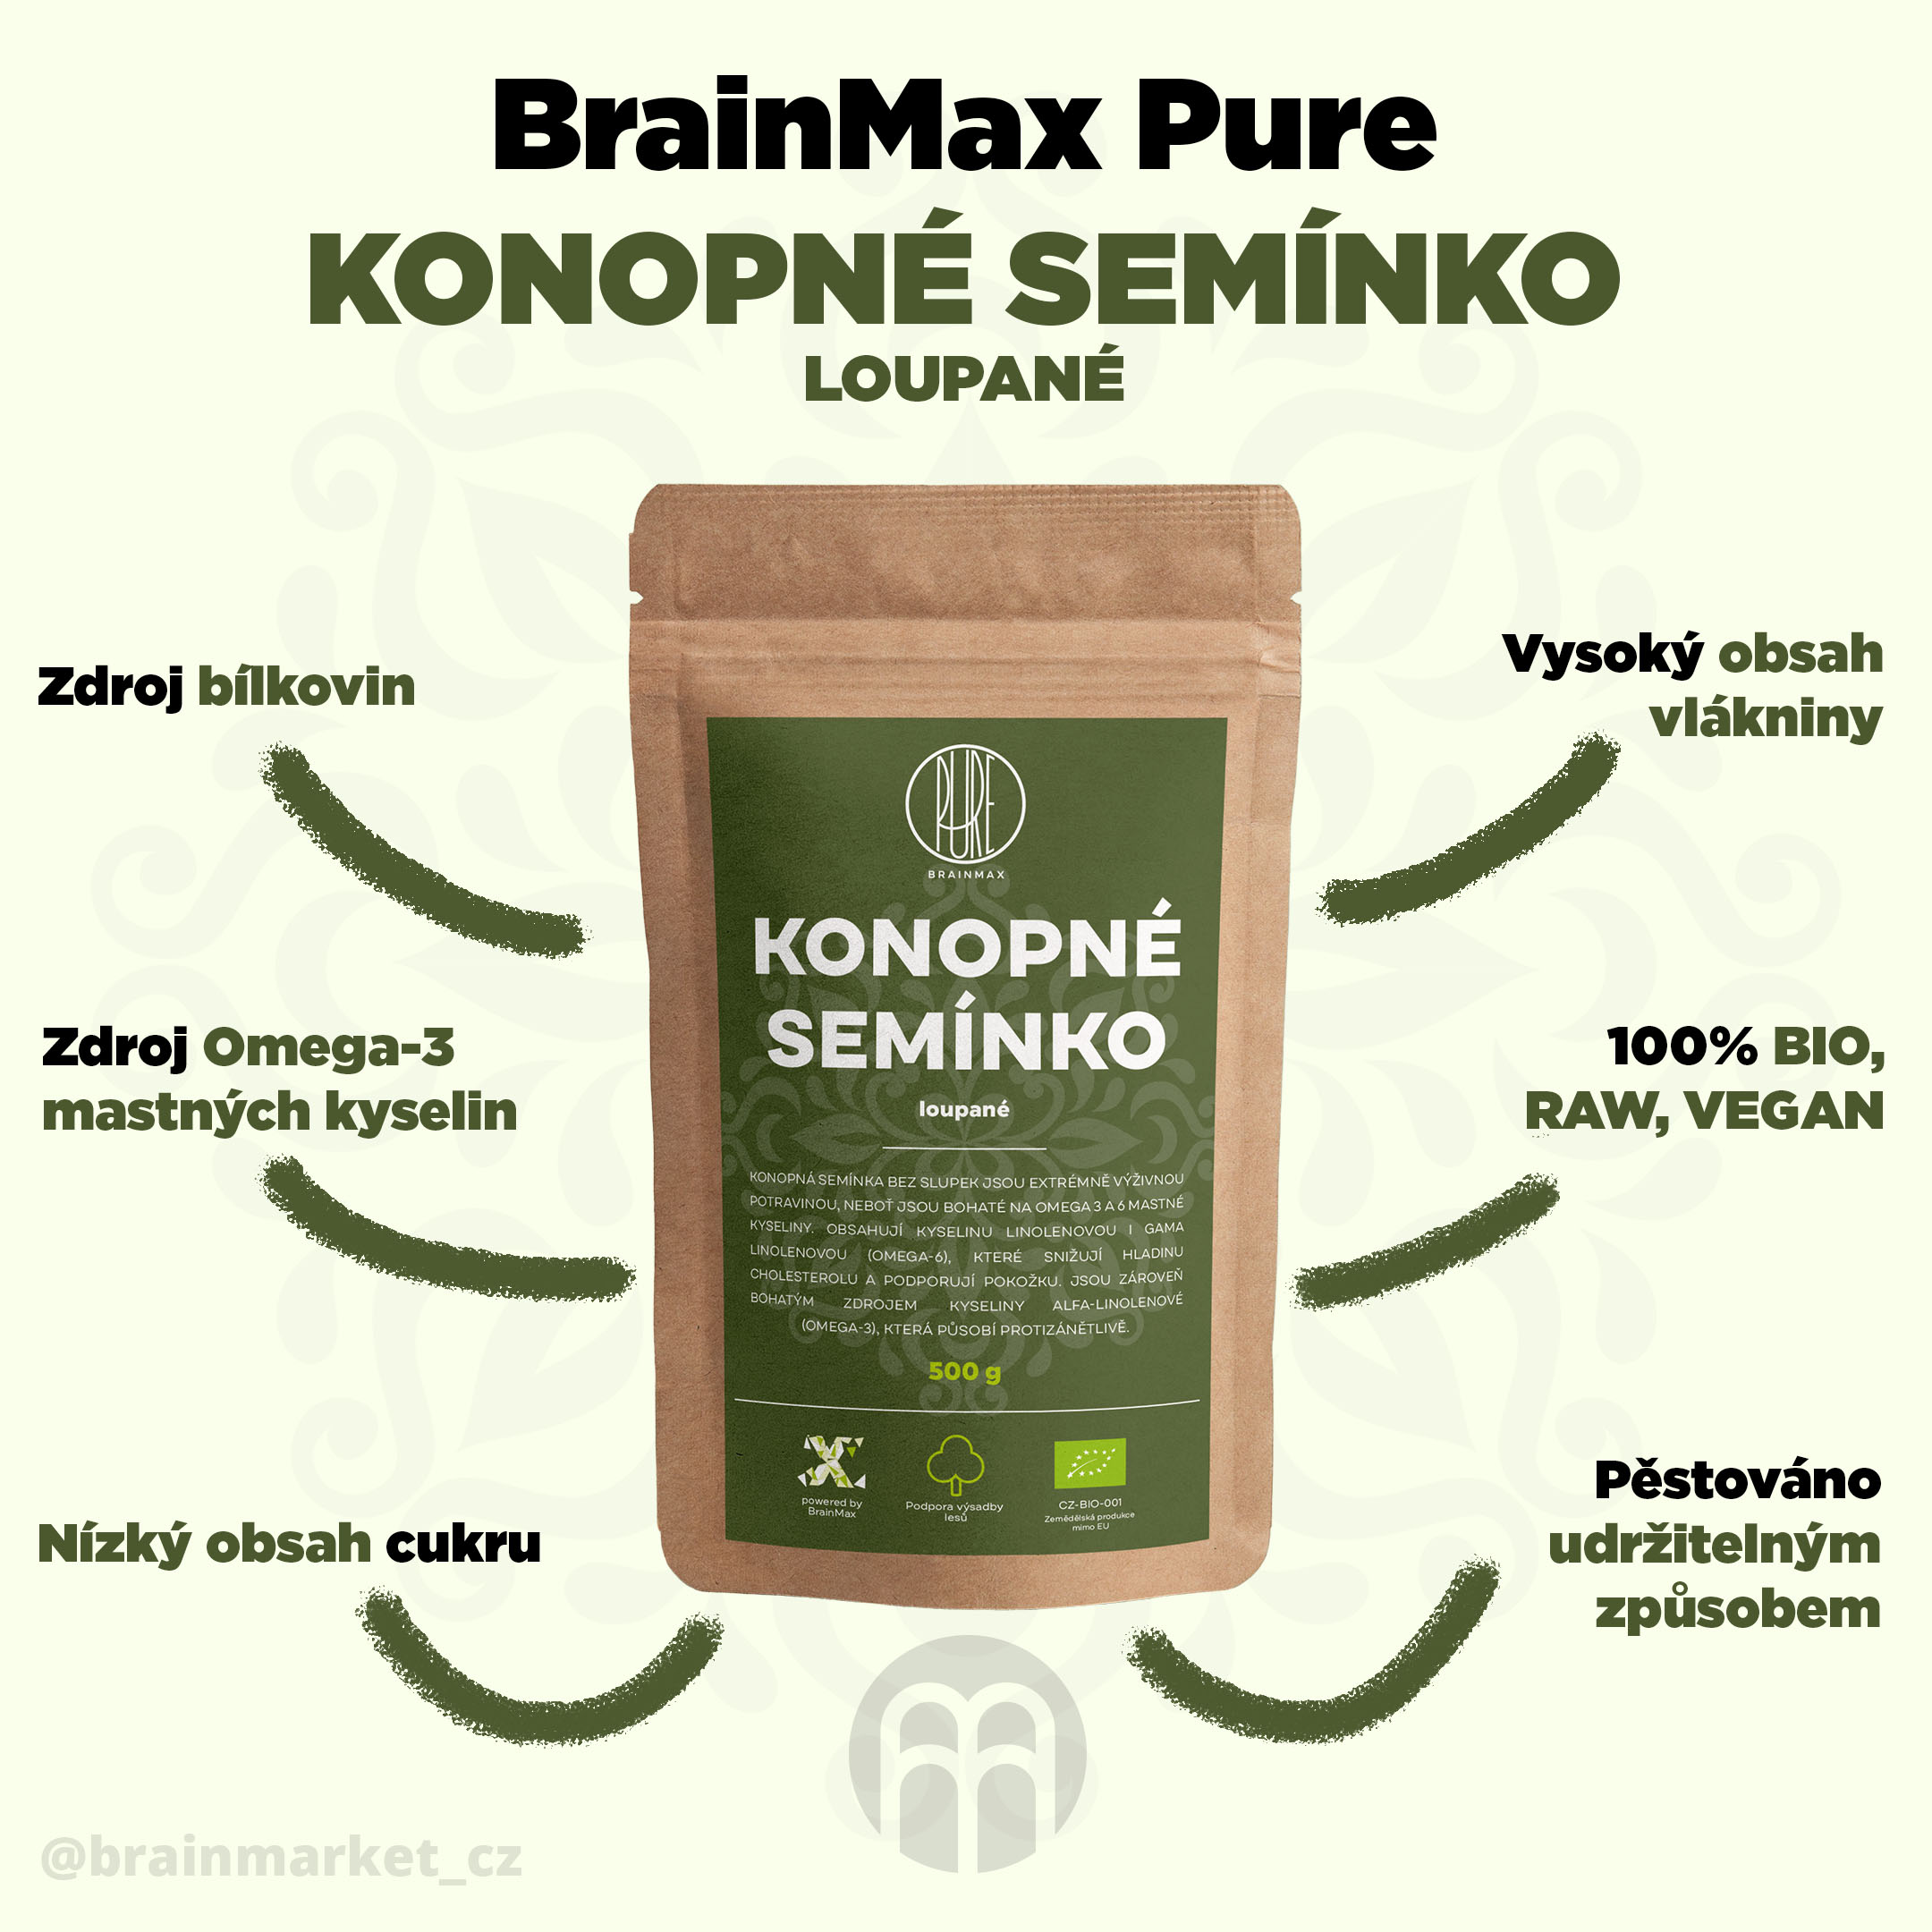 BrainMax Pure Konopné semínko loupané BIO - BrainMarket.cz